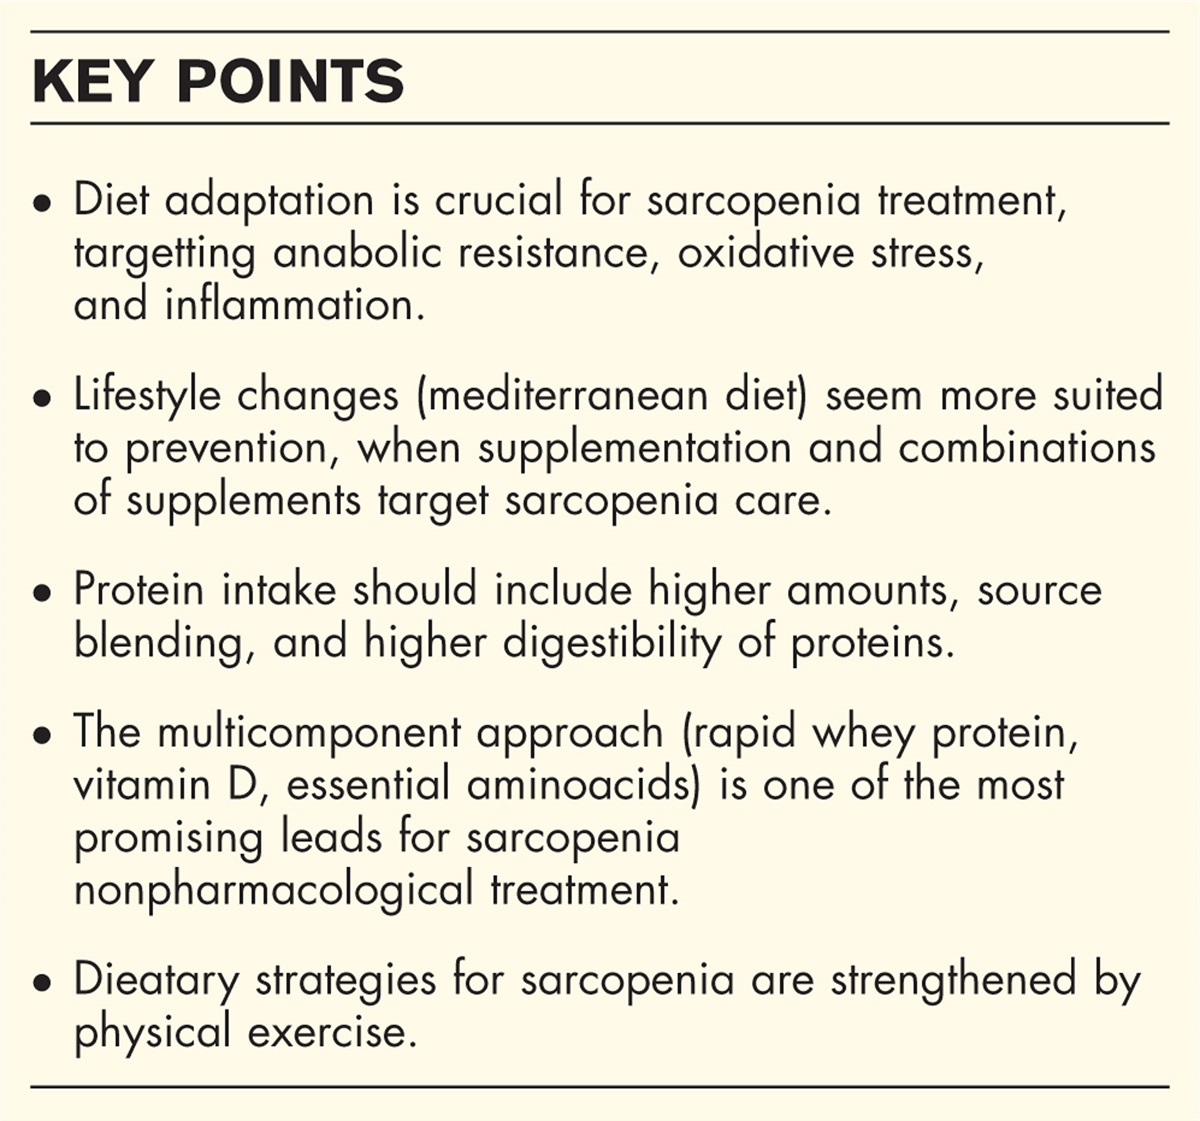 Novel dietary strategies to manage sarcopenia